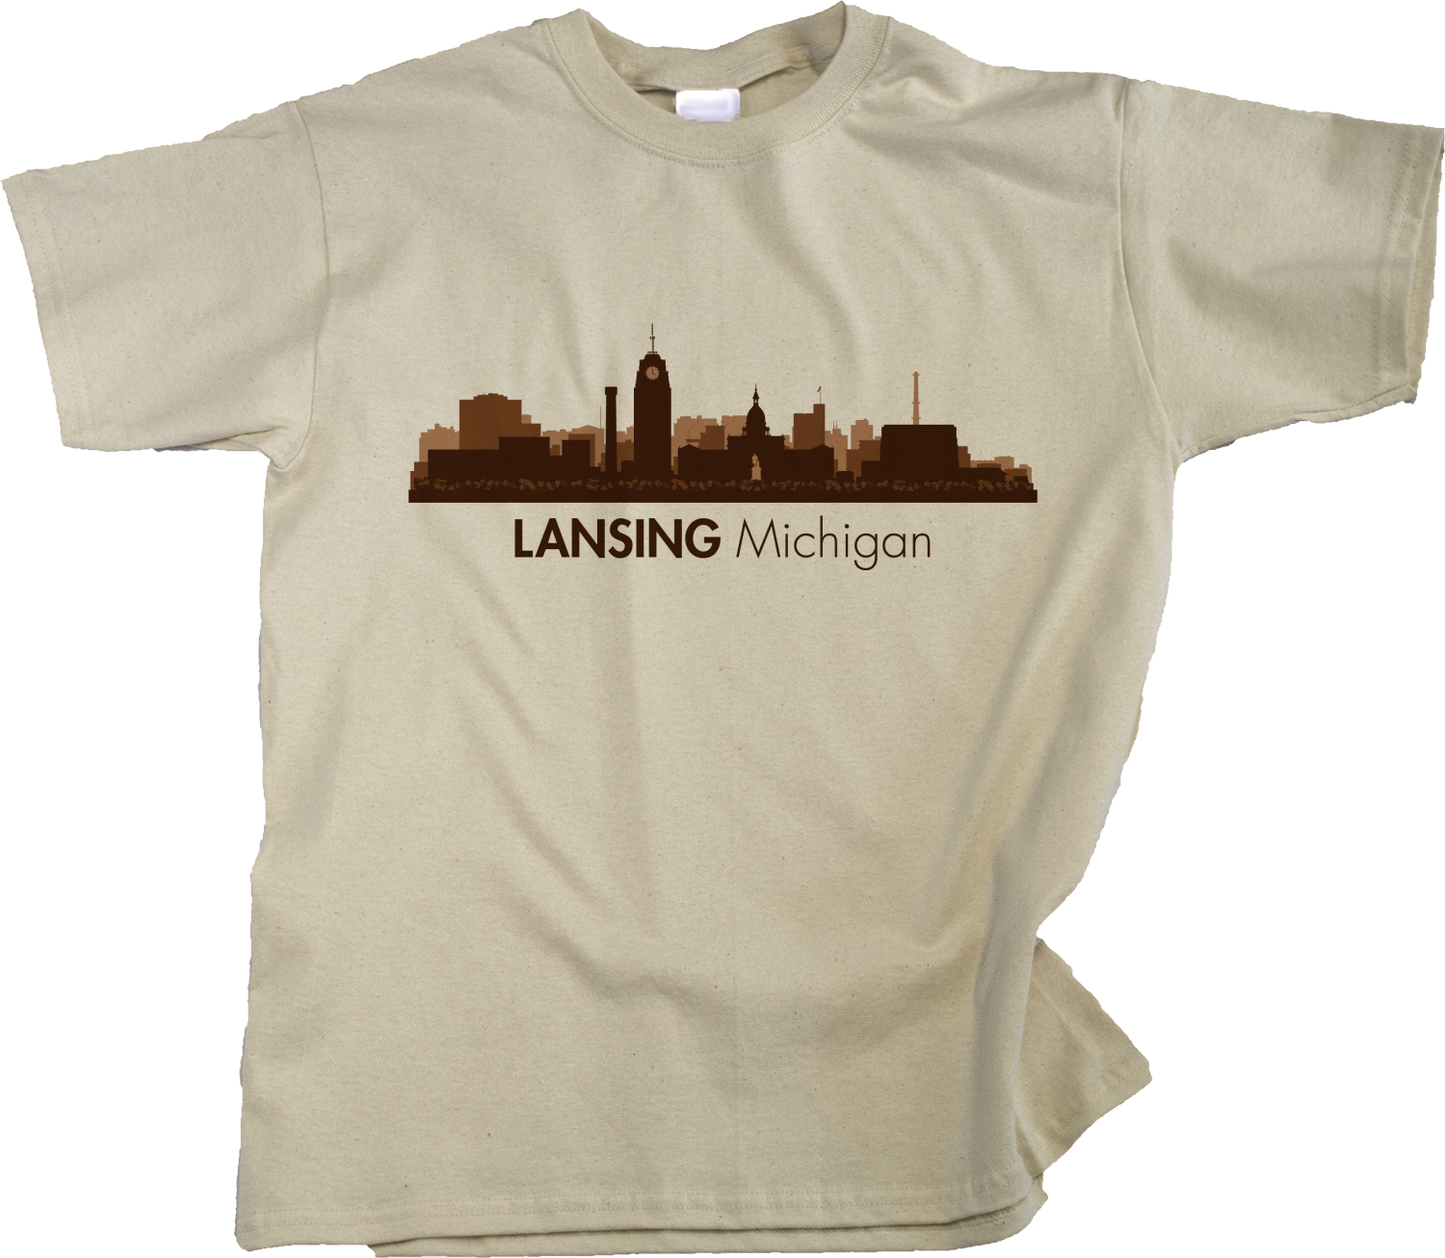 Youth Natural Skyline Of Lansing, Michigan - Michigan State Capital Love T-shirt